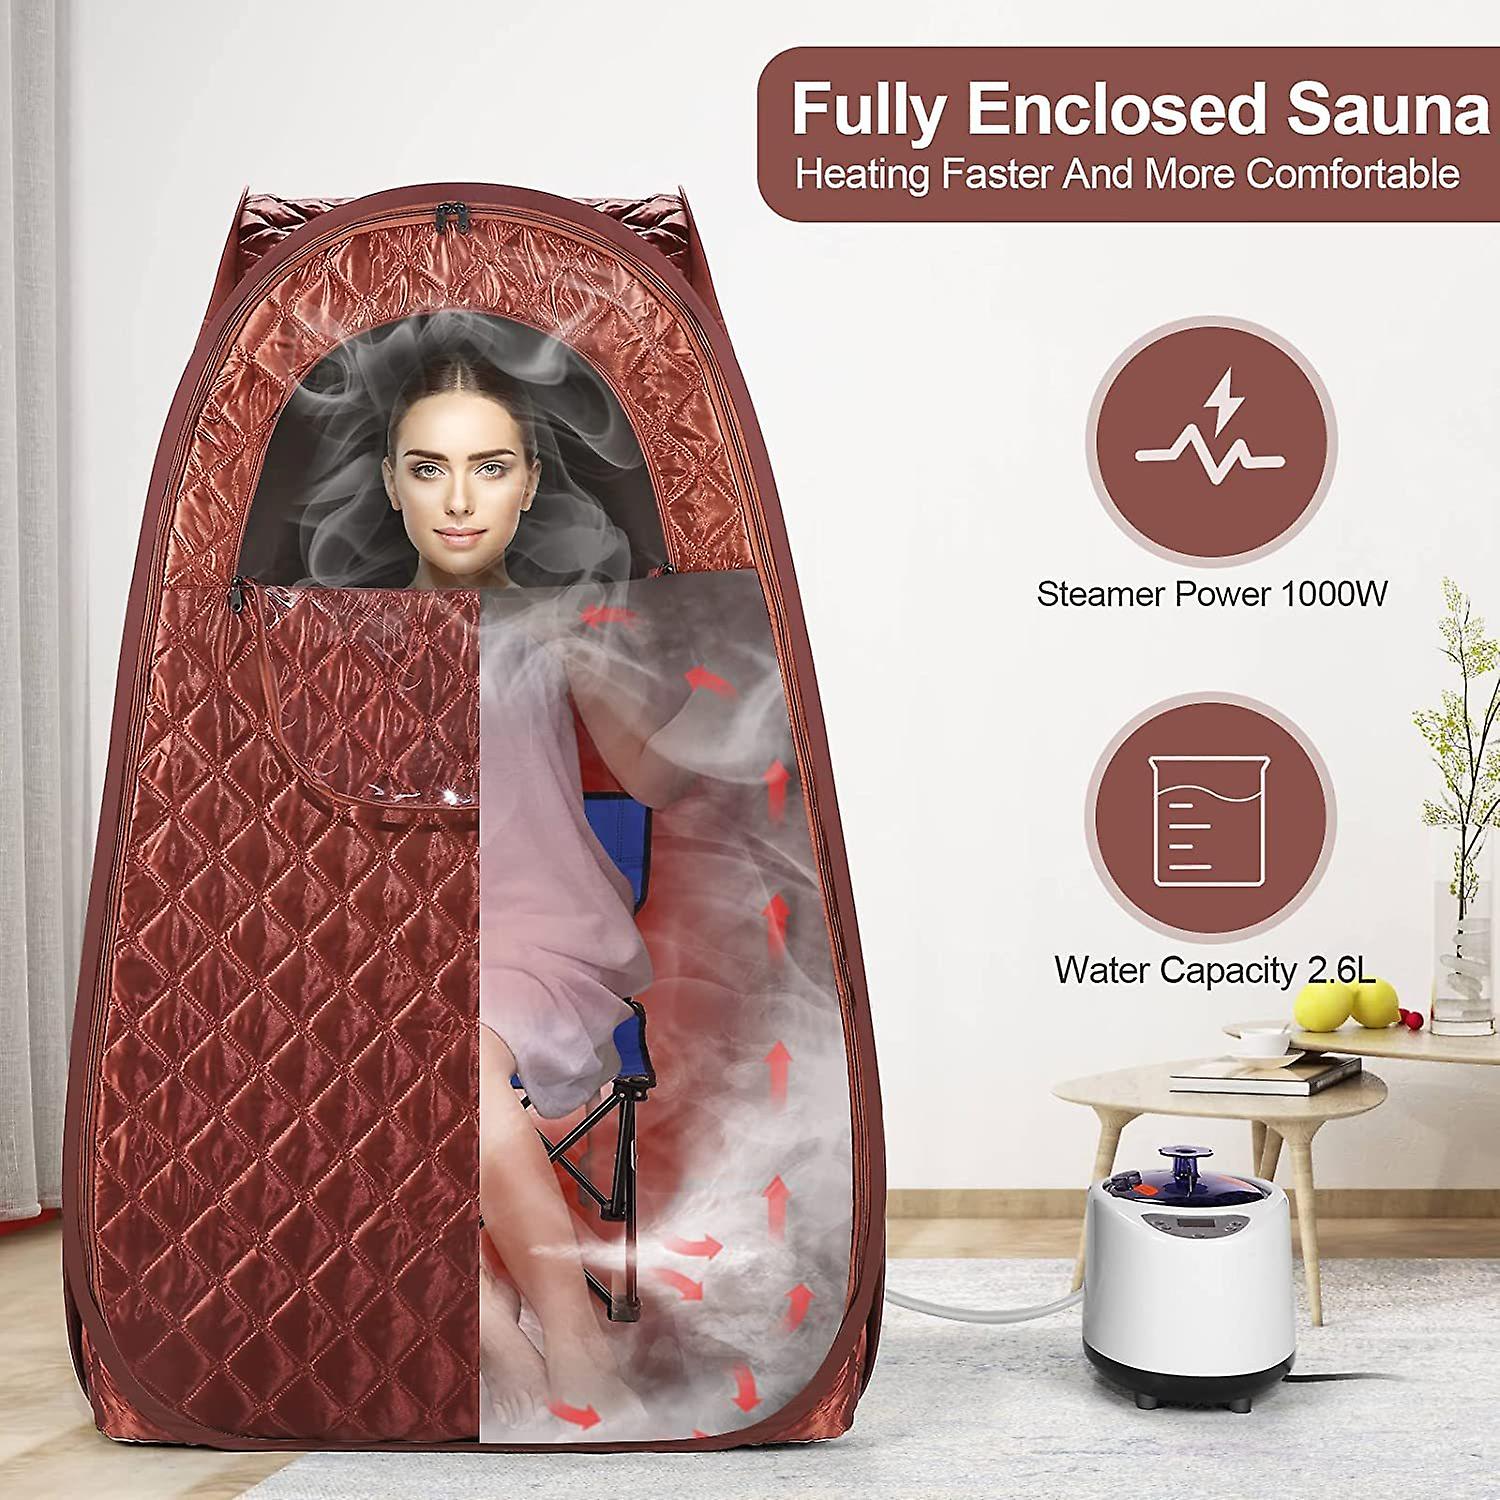 Single Person Sauna， Portable Steam Sauna Full Body For Home Spa， Sauna Tent With Steamer 2.6l 1000w Steam Generator， 90 Minute Timer， Chair， Remote C